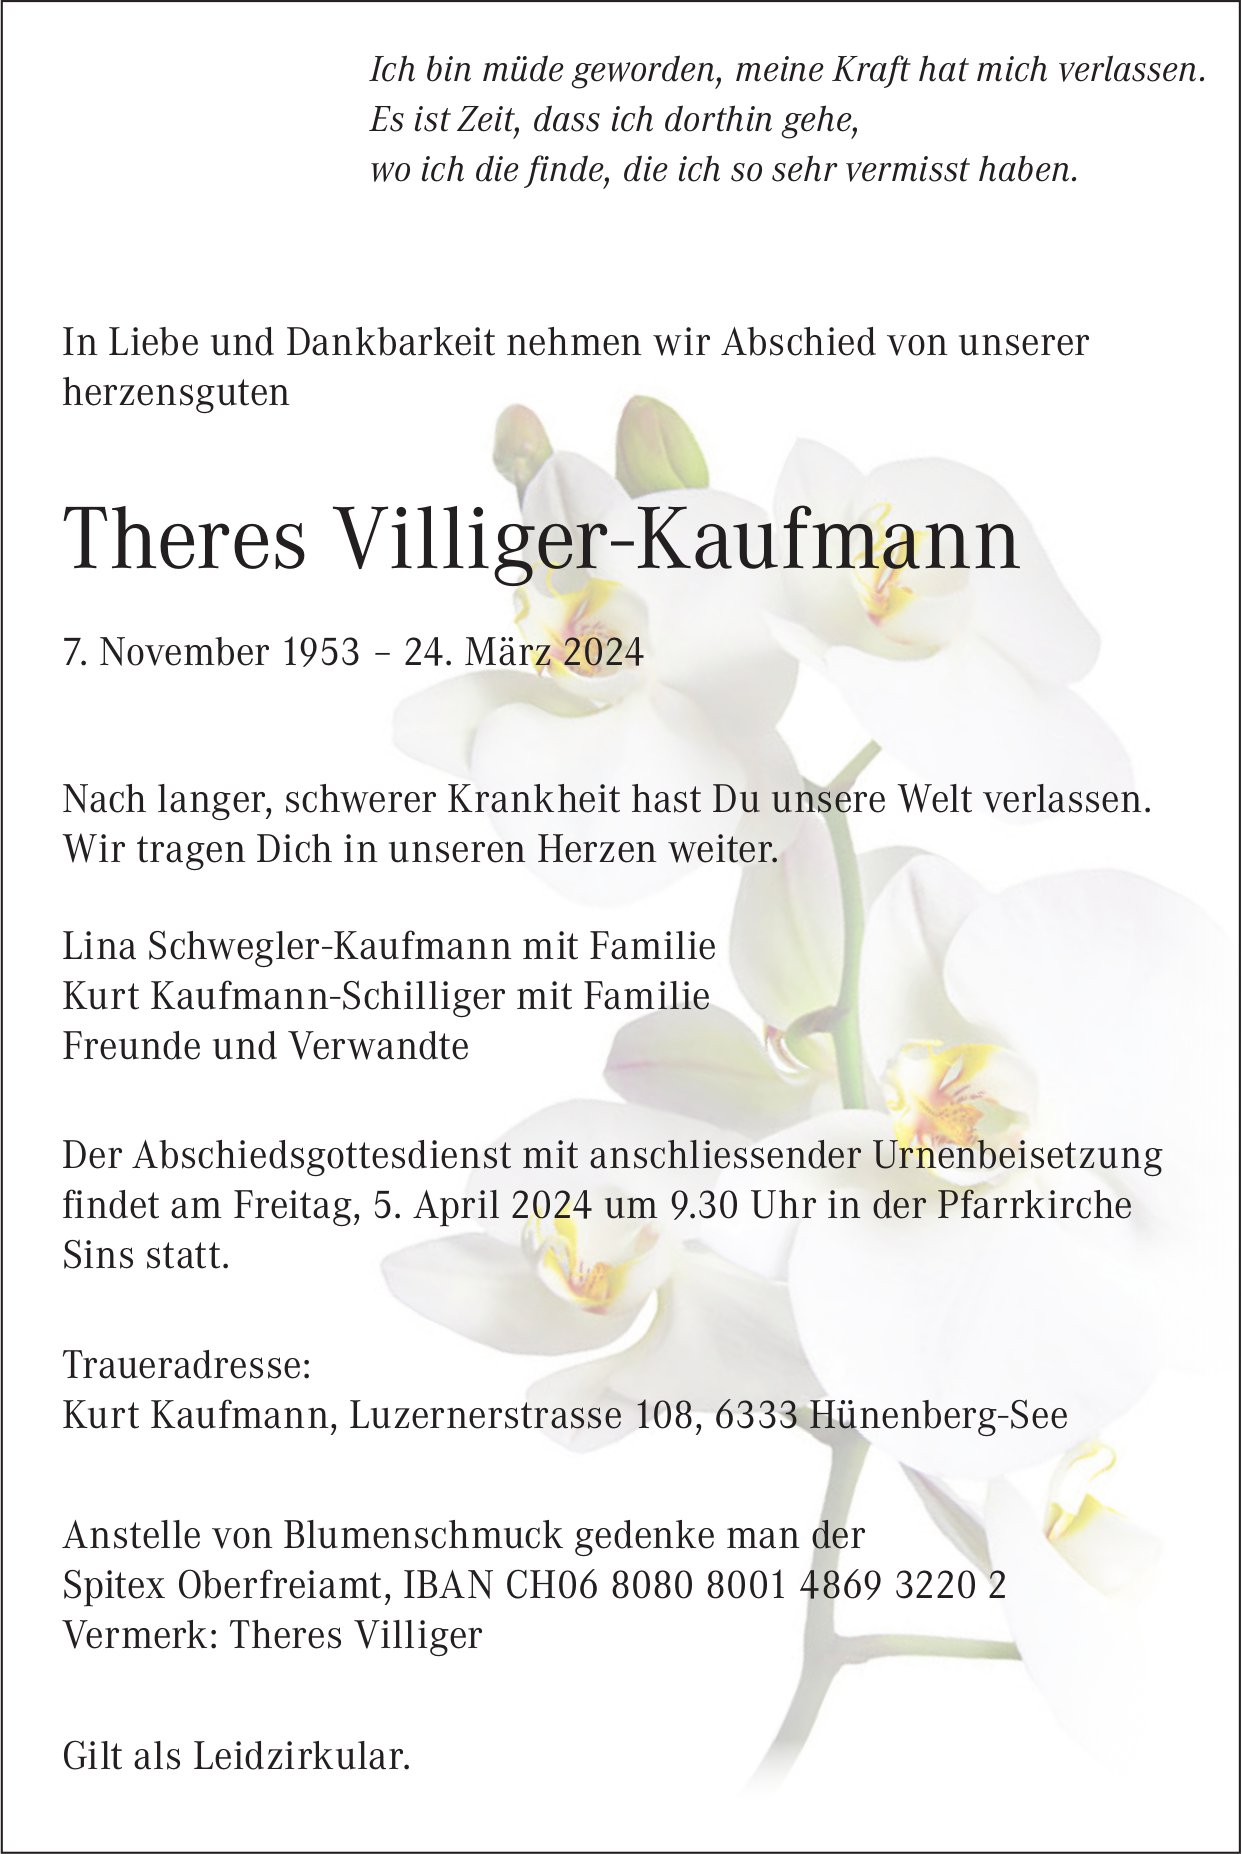 Villiger-Kaufmann Theres, März 2024 / TA